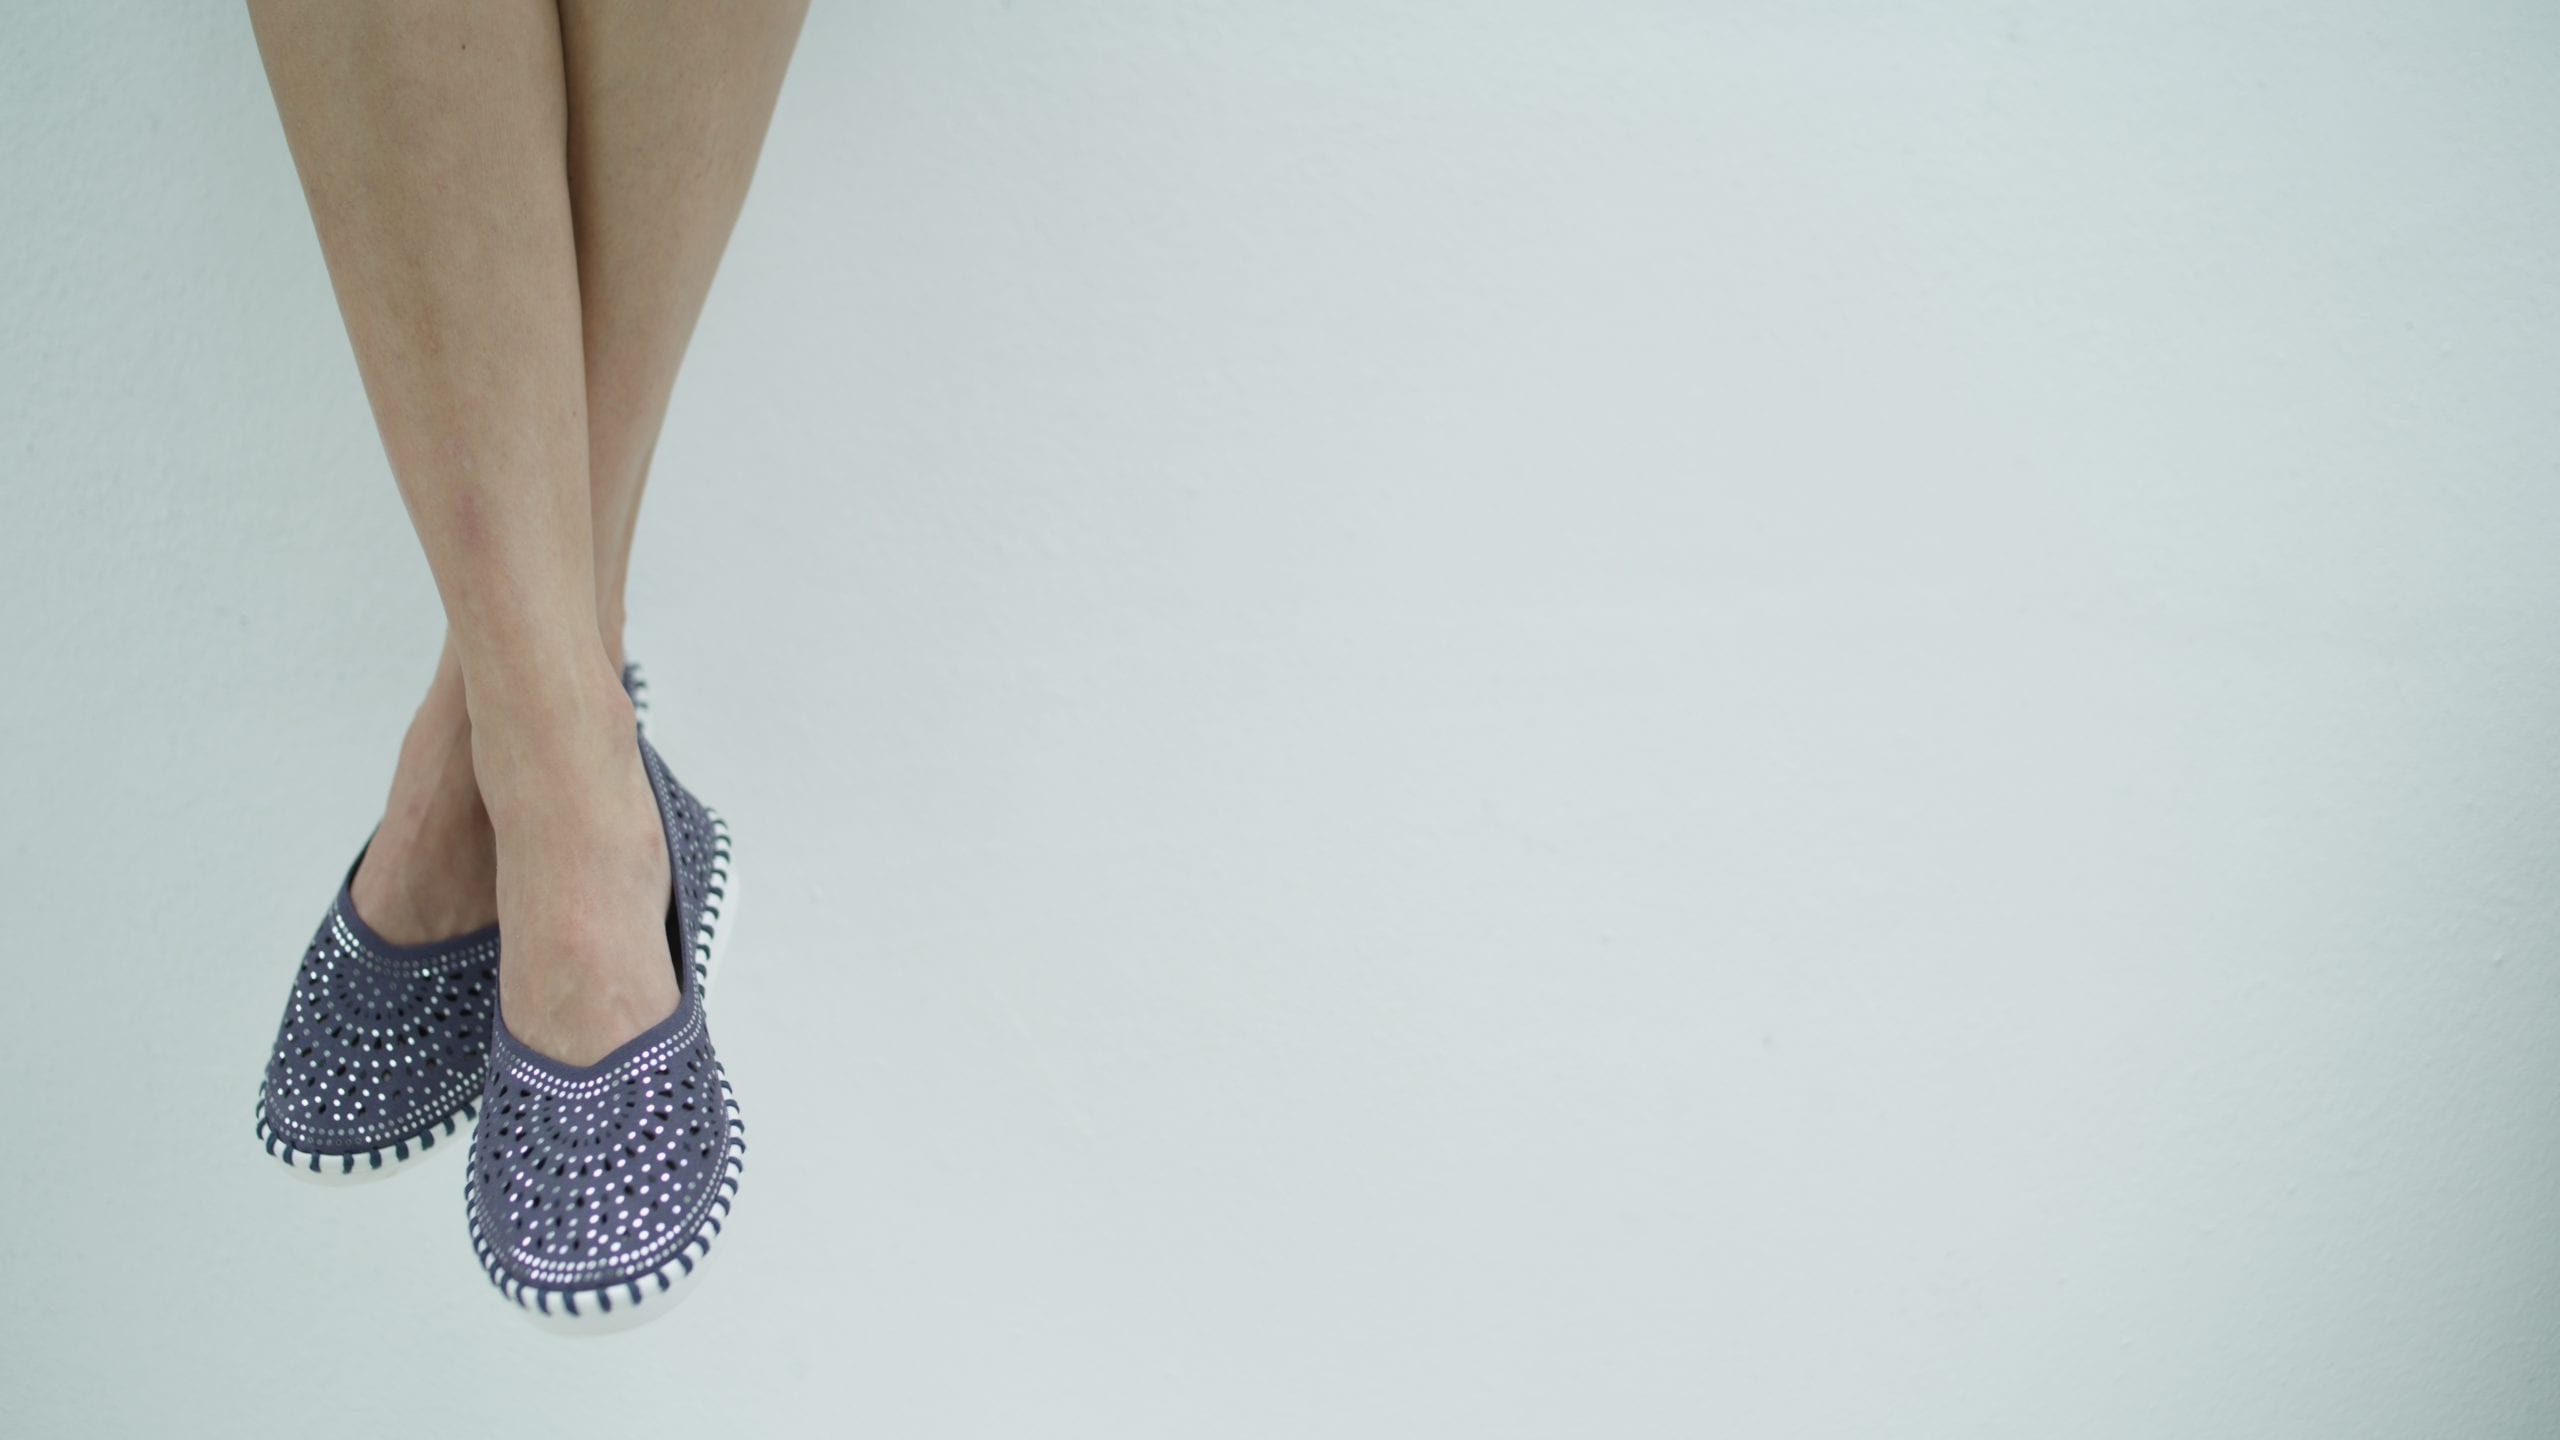 Spring StepPatrizia Flexus Dovi Maiwenn Blue Closeup of black and white shoes being worn by female model